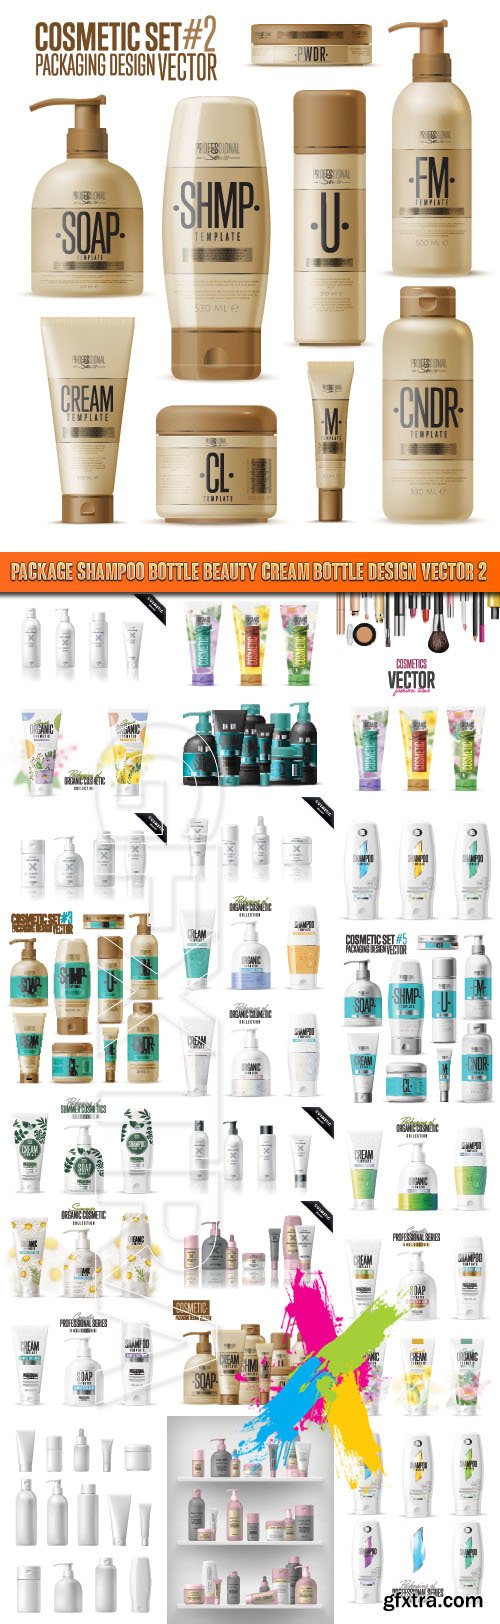 Package shampoo bottle beauty cream bottle design vector 2